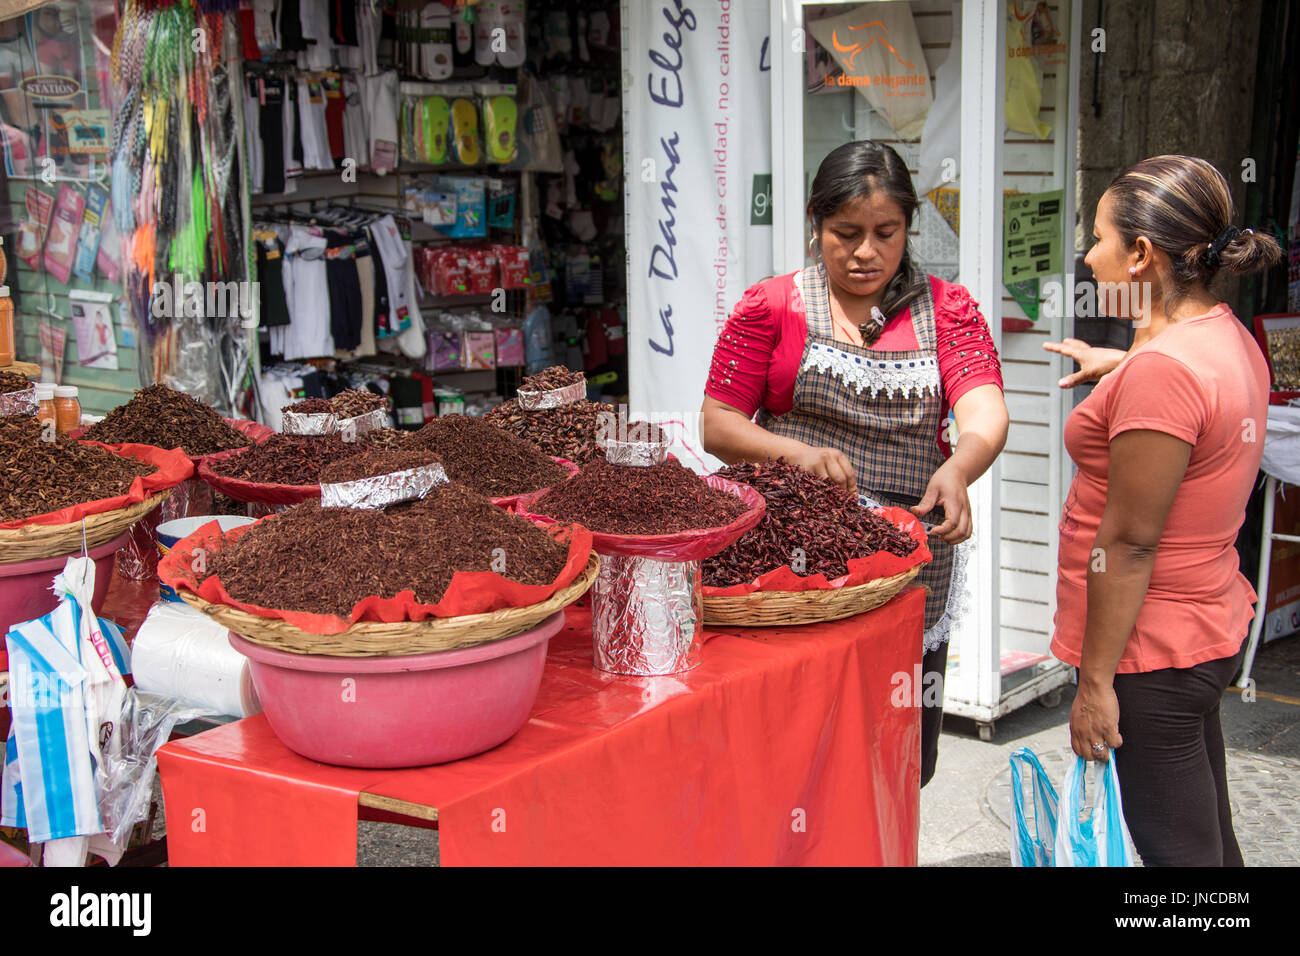 Vendeur insectes frits à Oaxaca, Mexique Banque D'Images